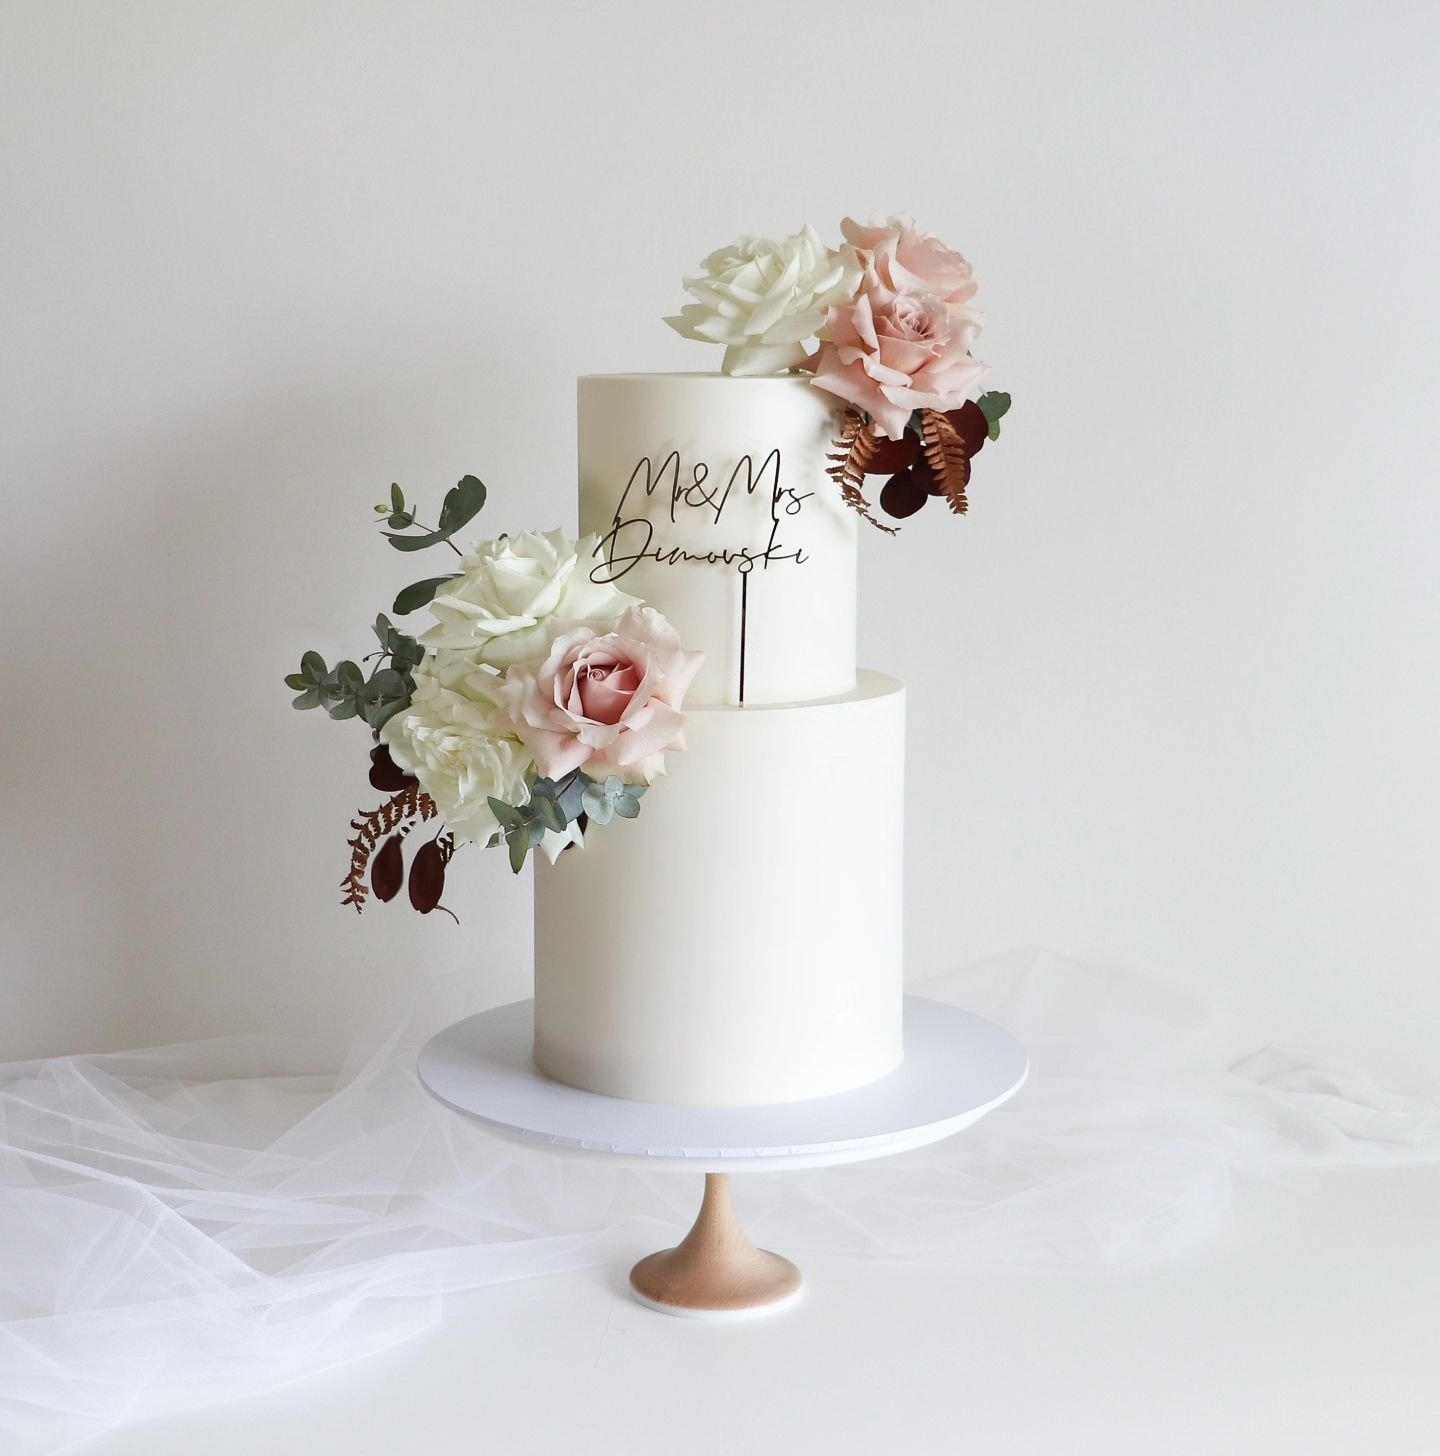 Mr &amp; Mrs Dimovski 🥂

#cakedesign #geelongweddings #geelongcakes #floraldesign #weddingcakes #weddingcakeideas #wedding #flowercake